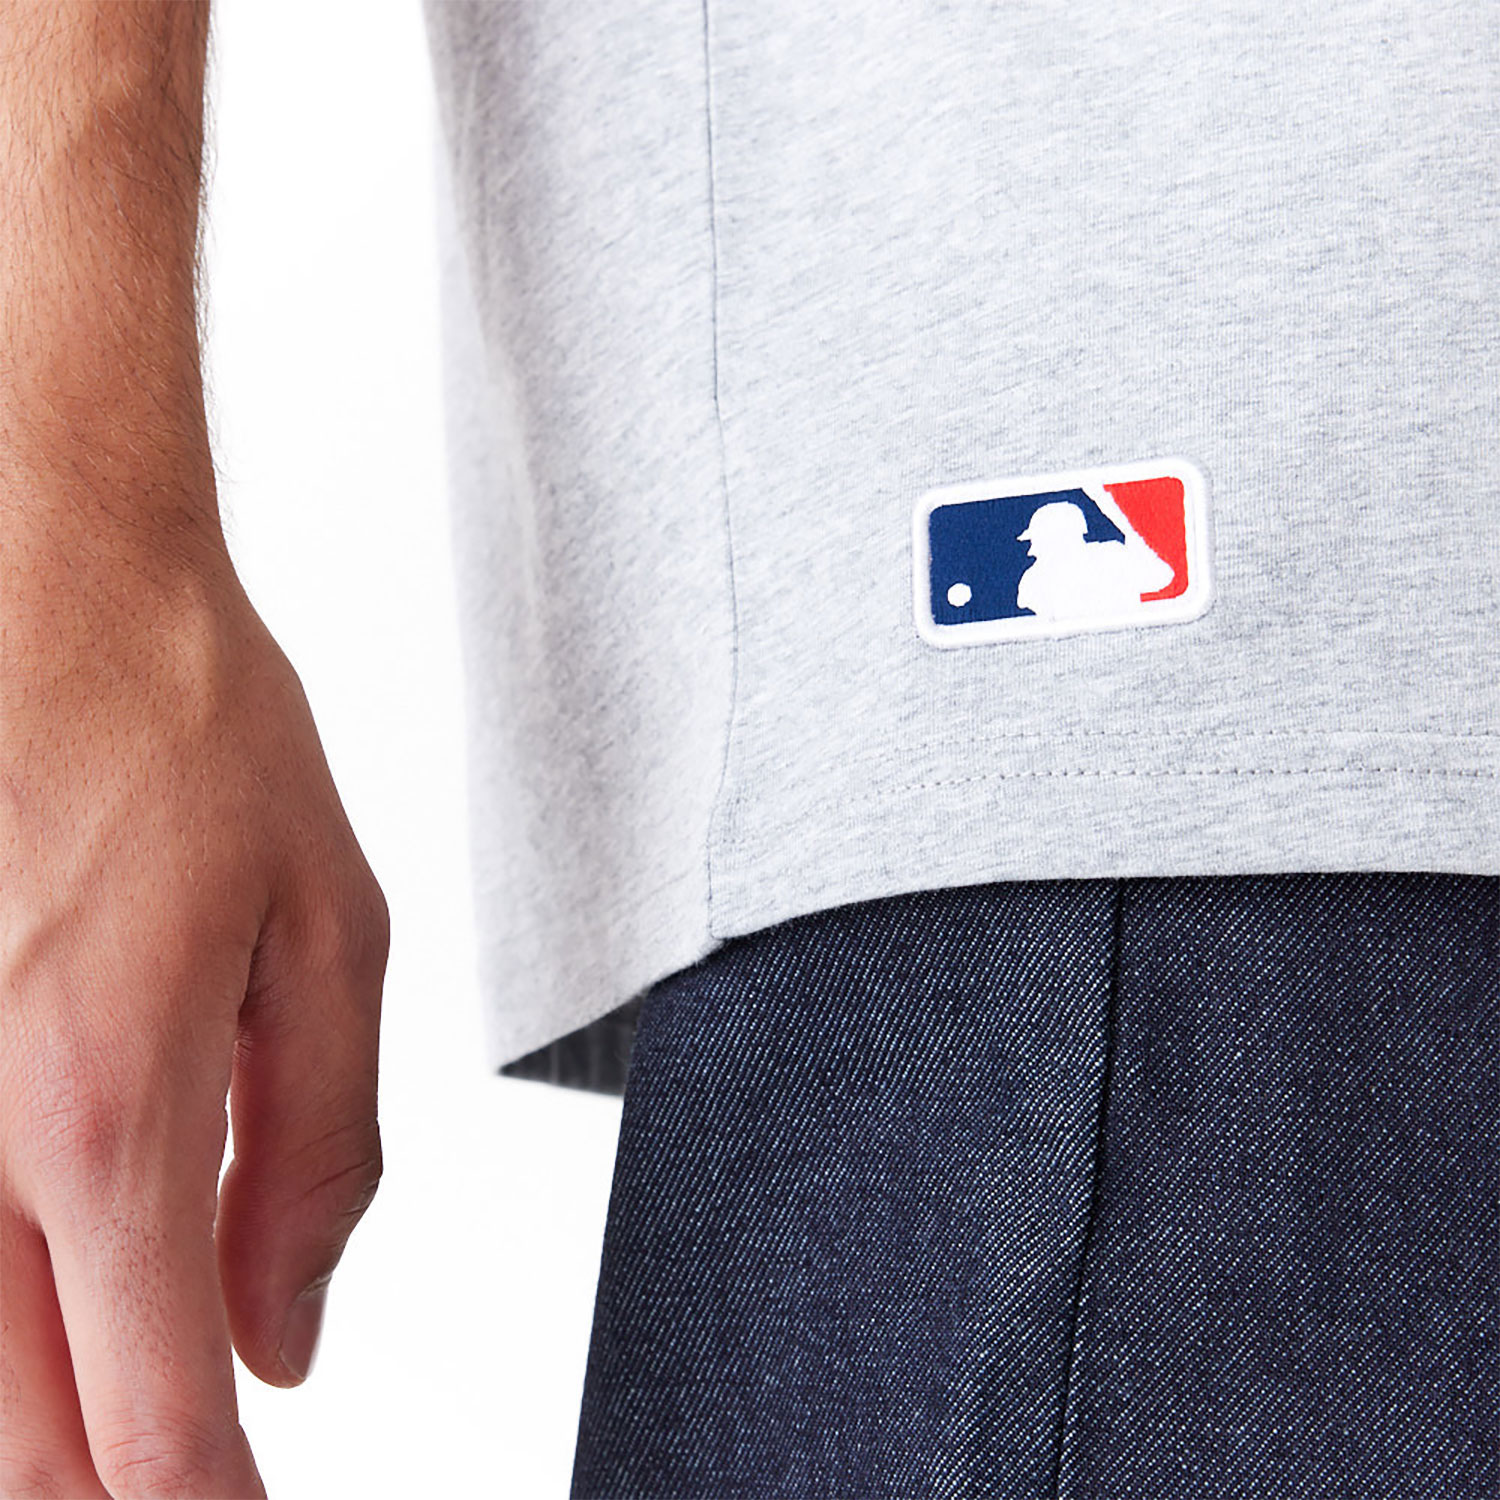 Oakland Athletics MLB World Series Grey Oversized T-Shirt